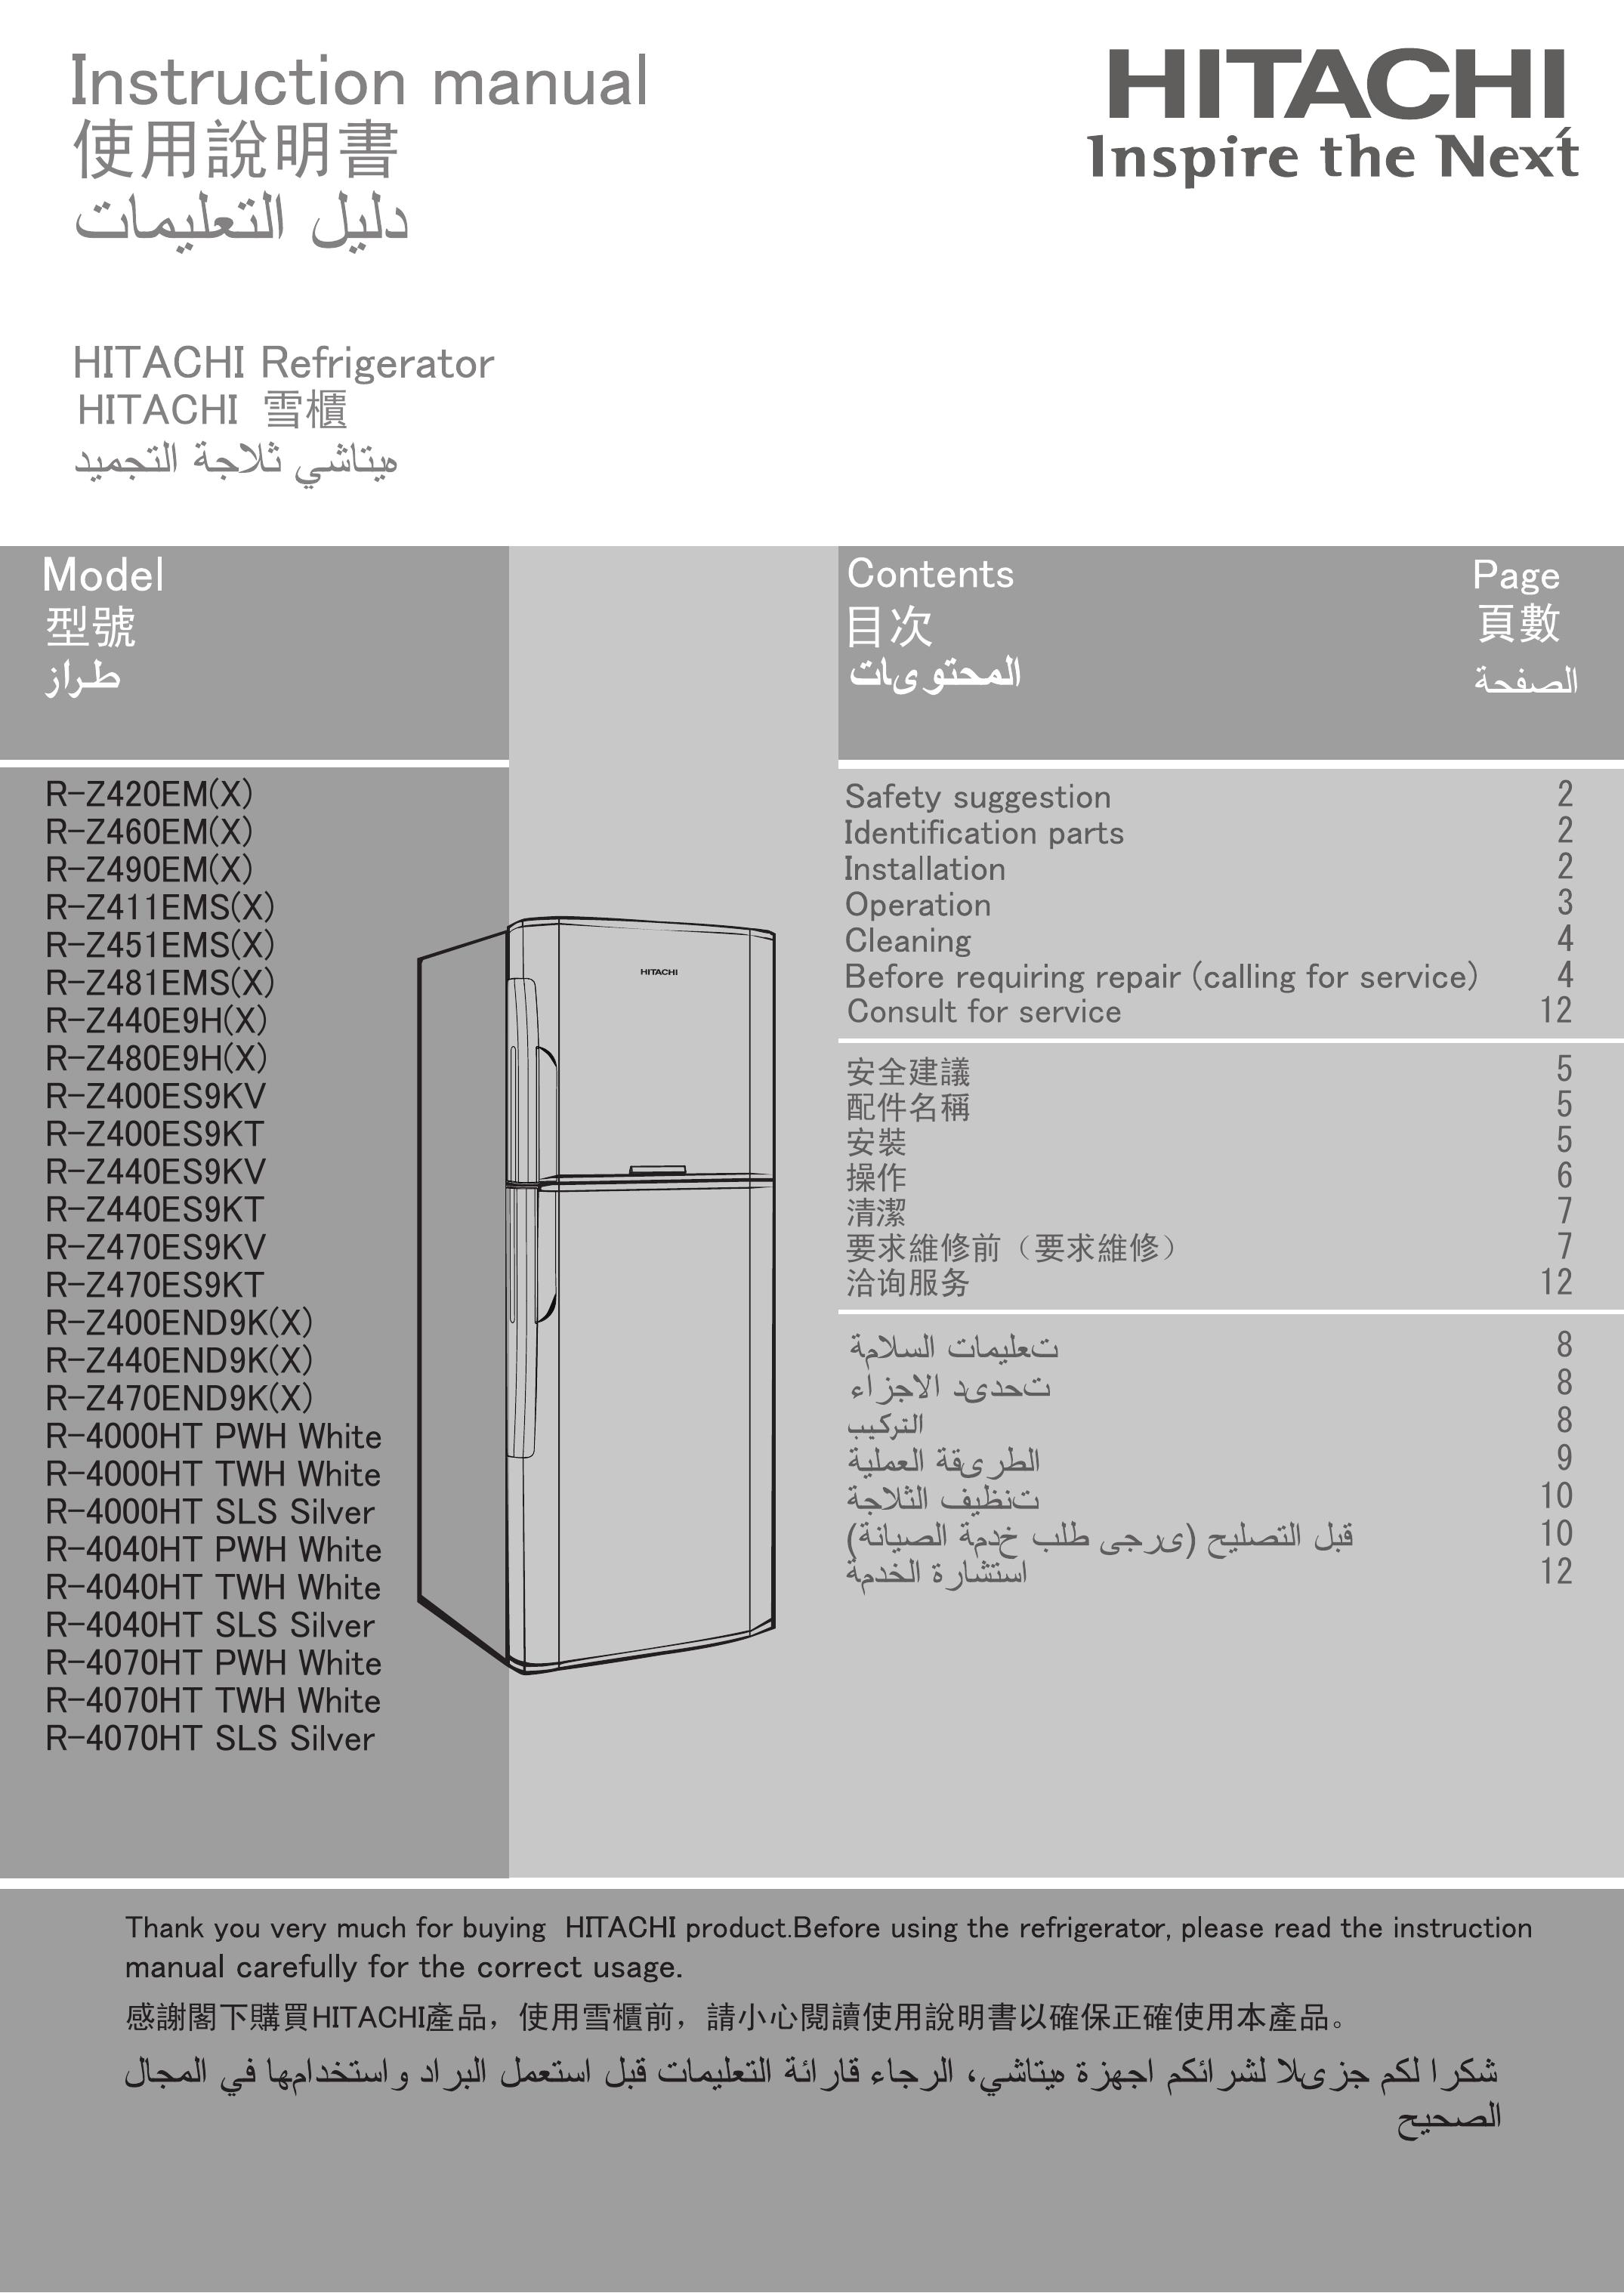 Hitachi R-4070HT PWH White Refrigerator User Manual